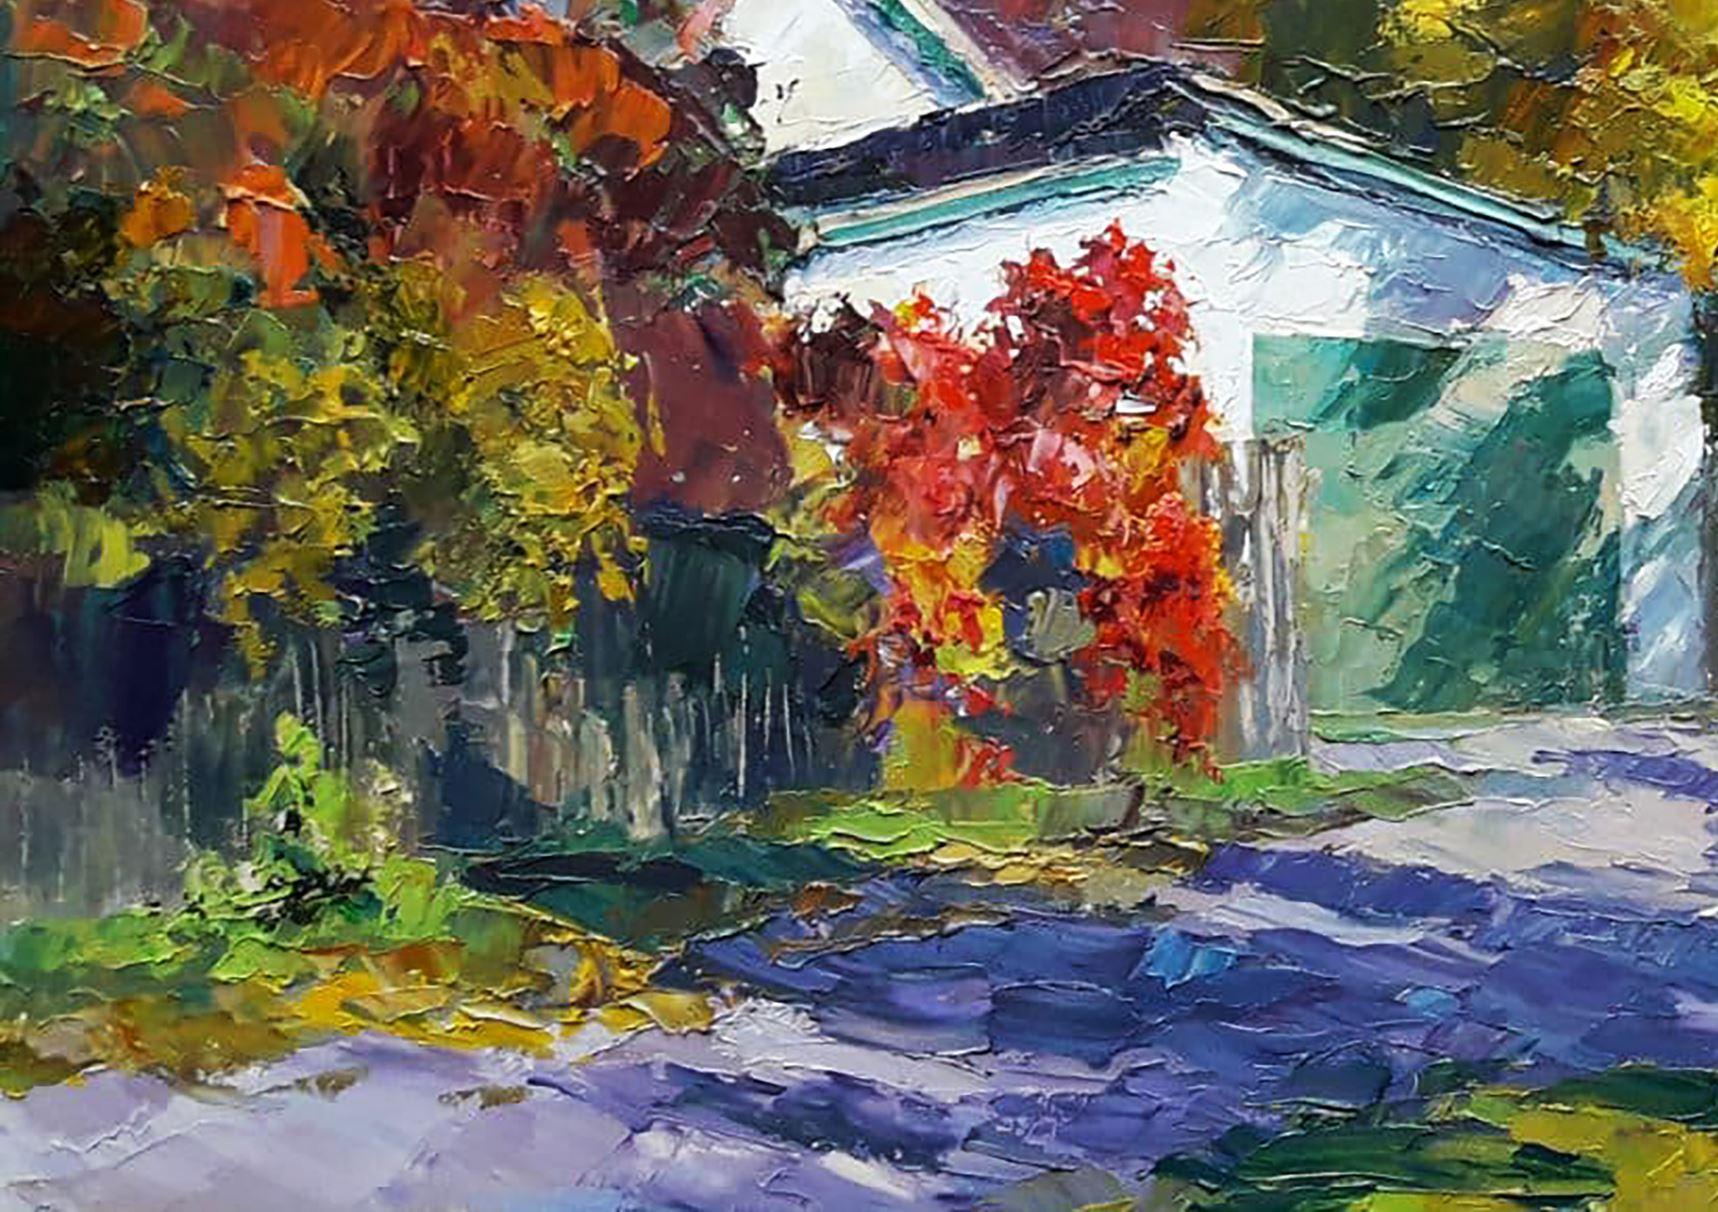 Artist: Boris Serdyuk 
Work: Original oil painting, handmade artwork, one of a kind 
Medium: Oil on Canvas
Style: Impressionism
Year: 2020
Title: Autumn Morning
Size: 19.5